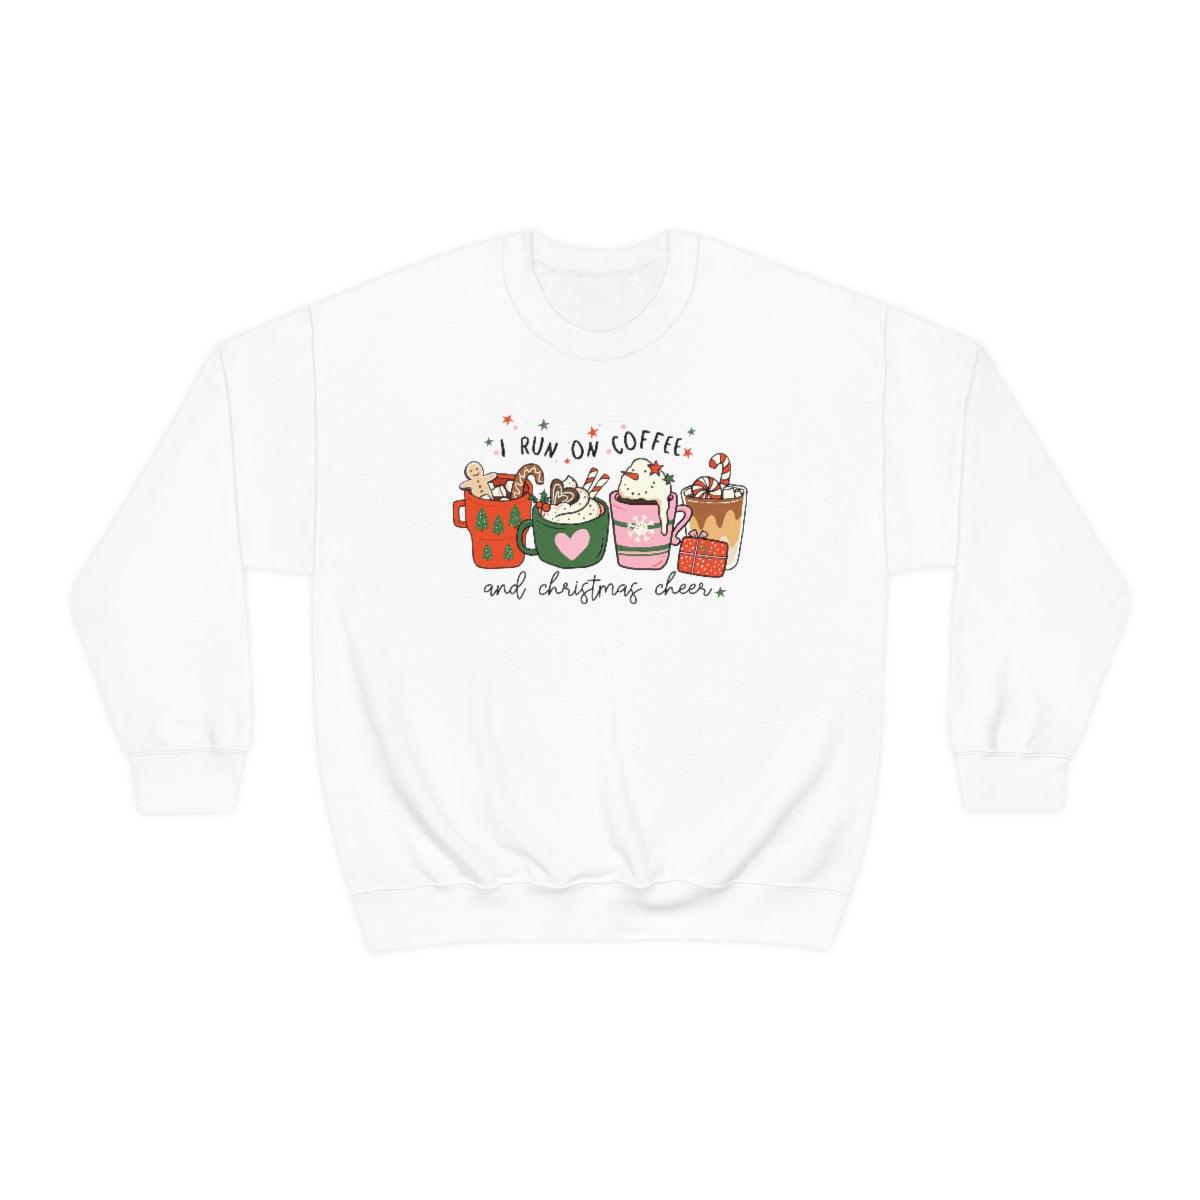 I Run On Coffee and Christmas Cheer Christmas Crewneck Sweater - Crystal Rose Design Co.